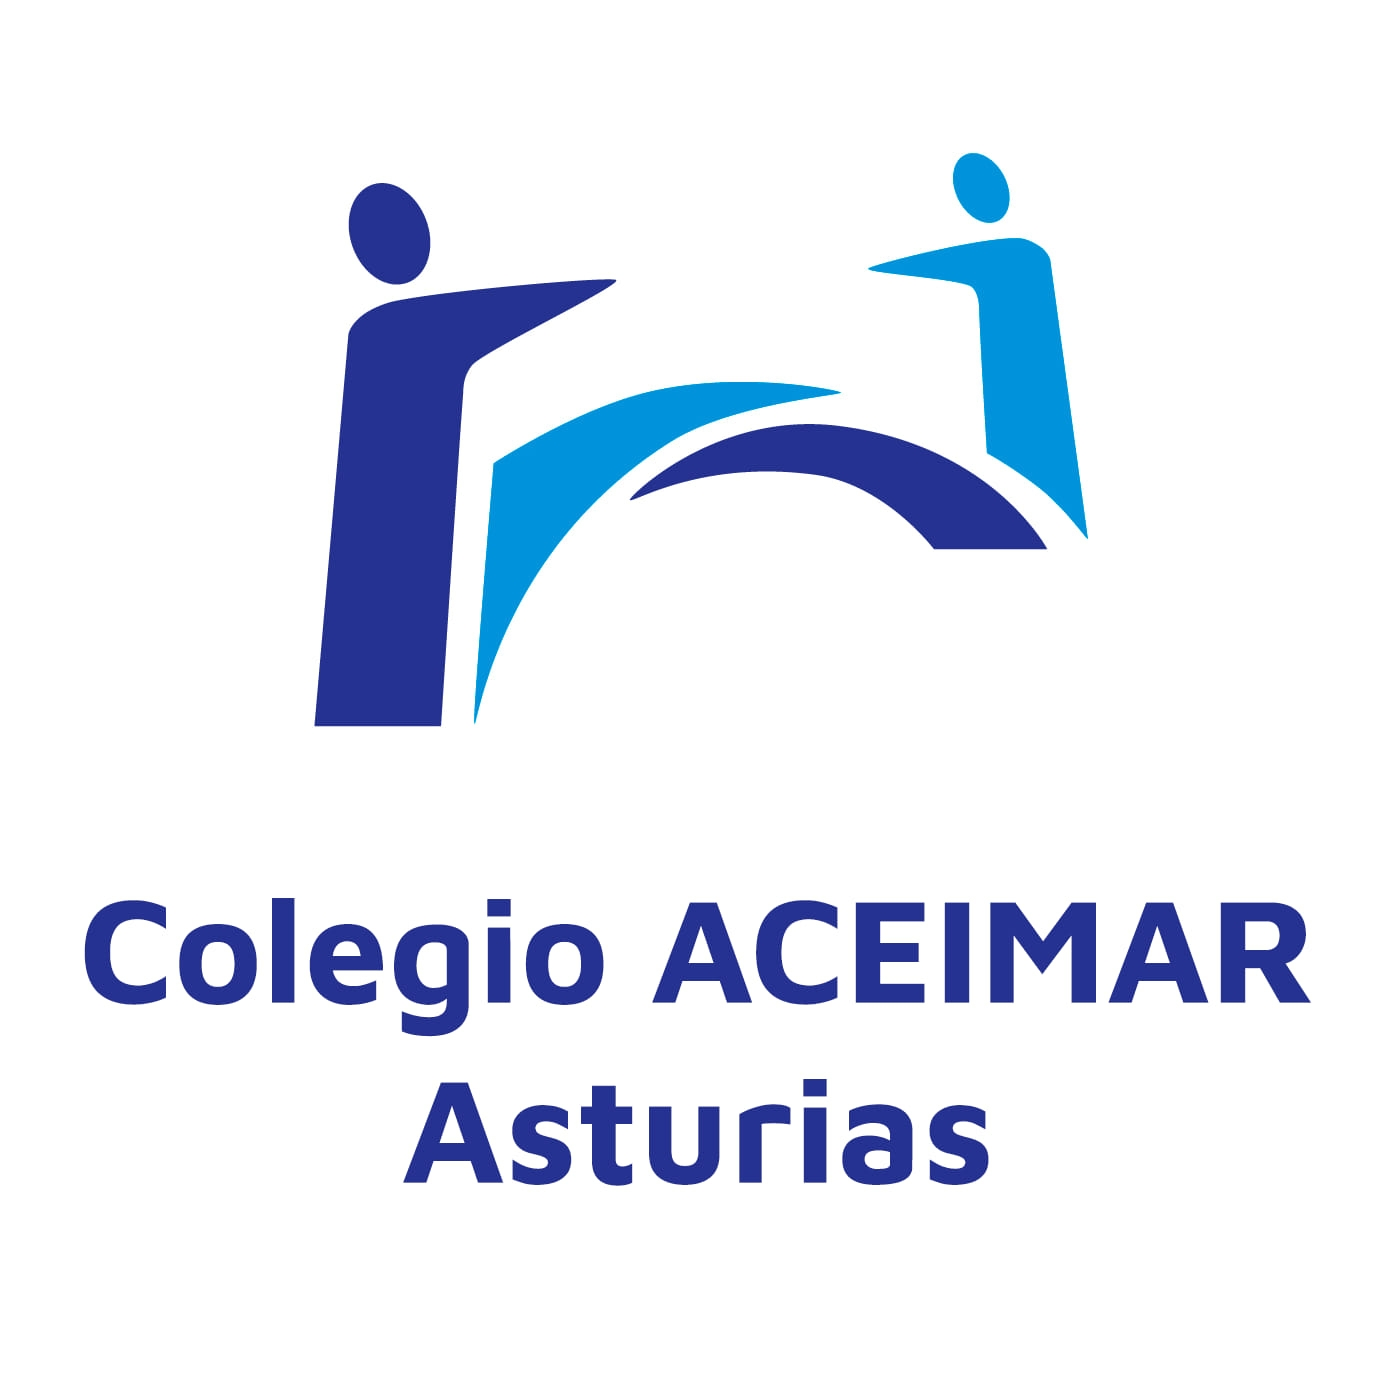 ACEIMAR, Complejo Educativo, Colegio Aceimar Asturias